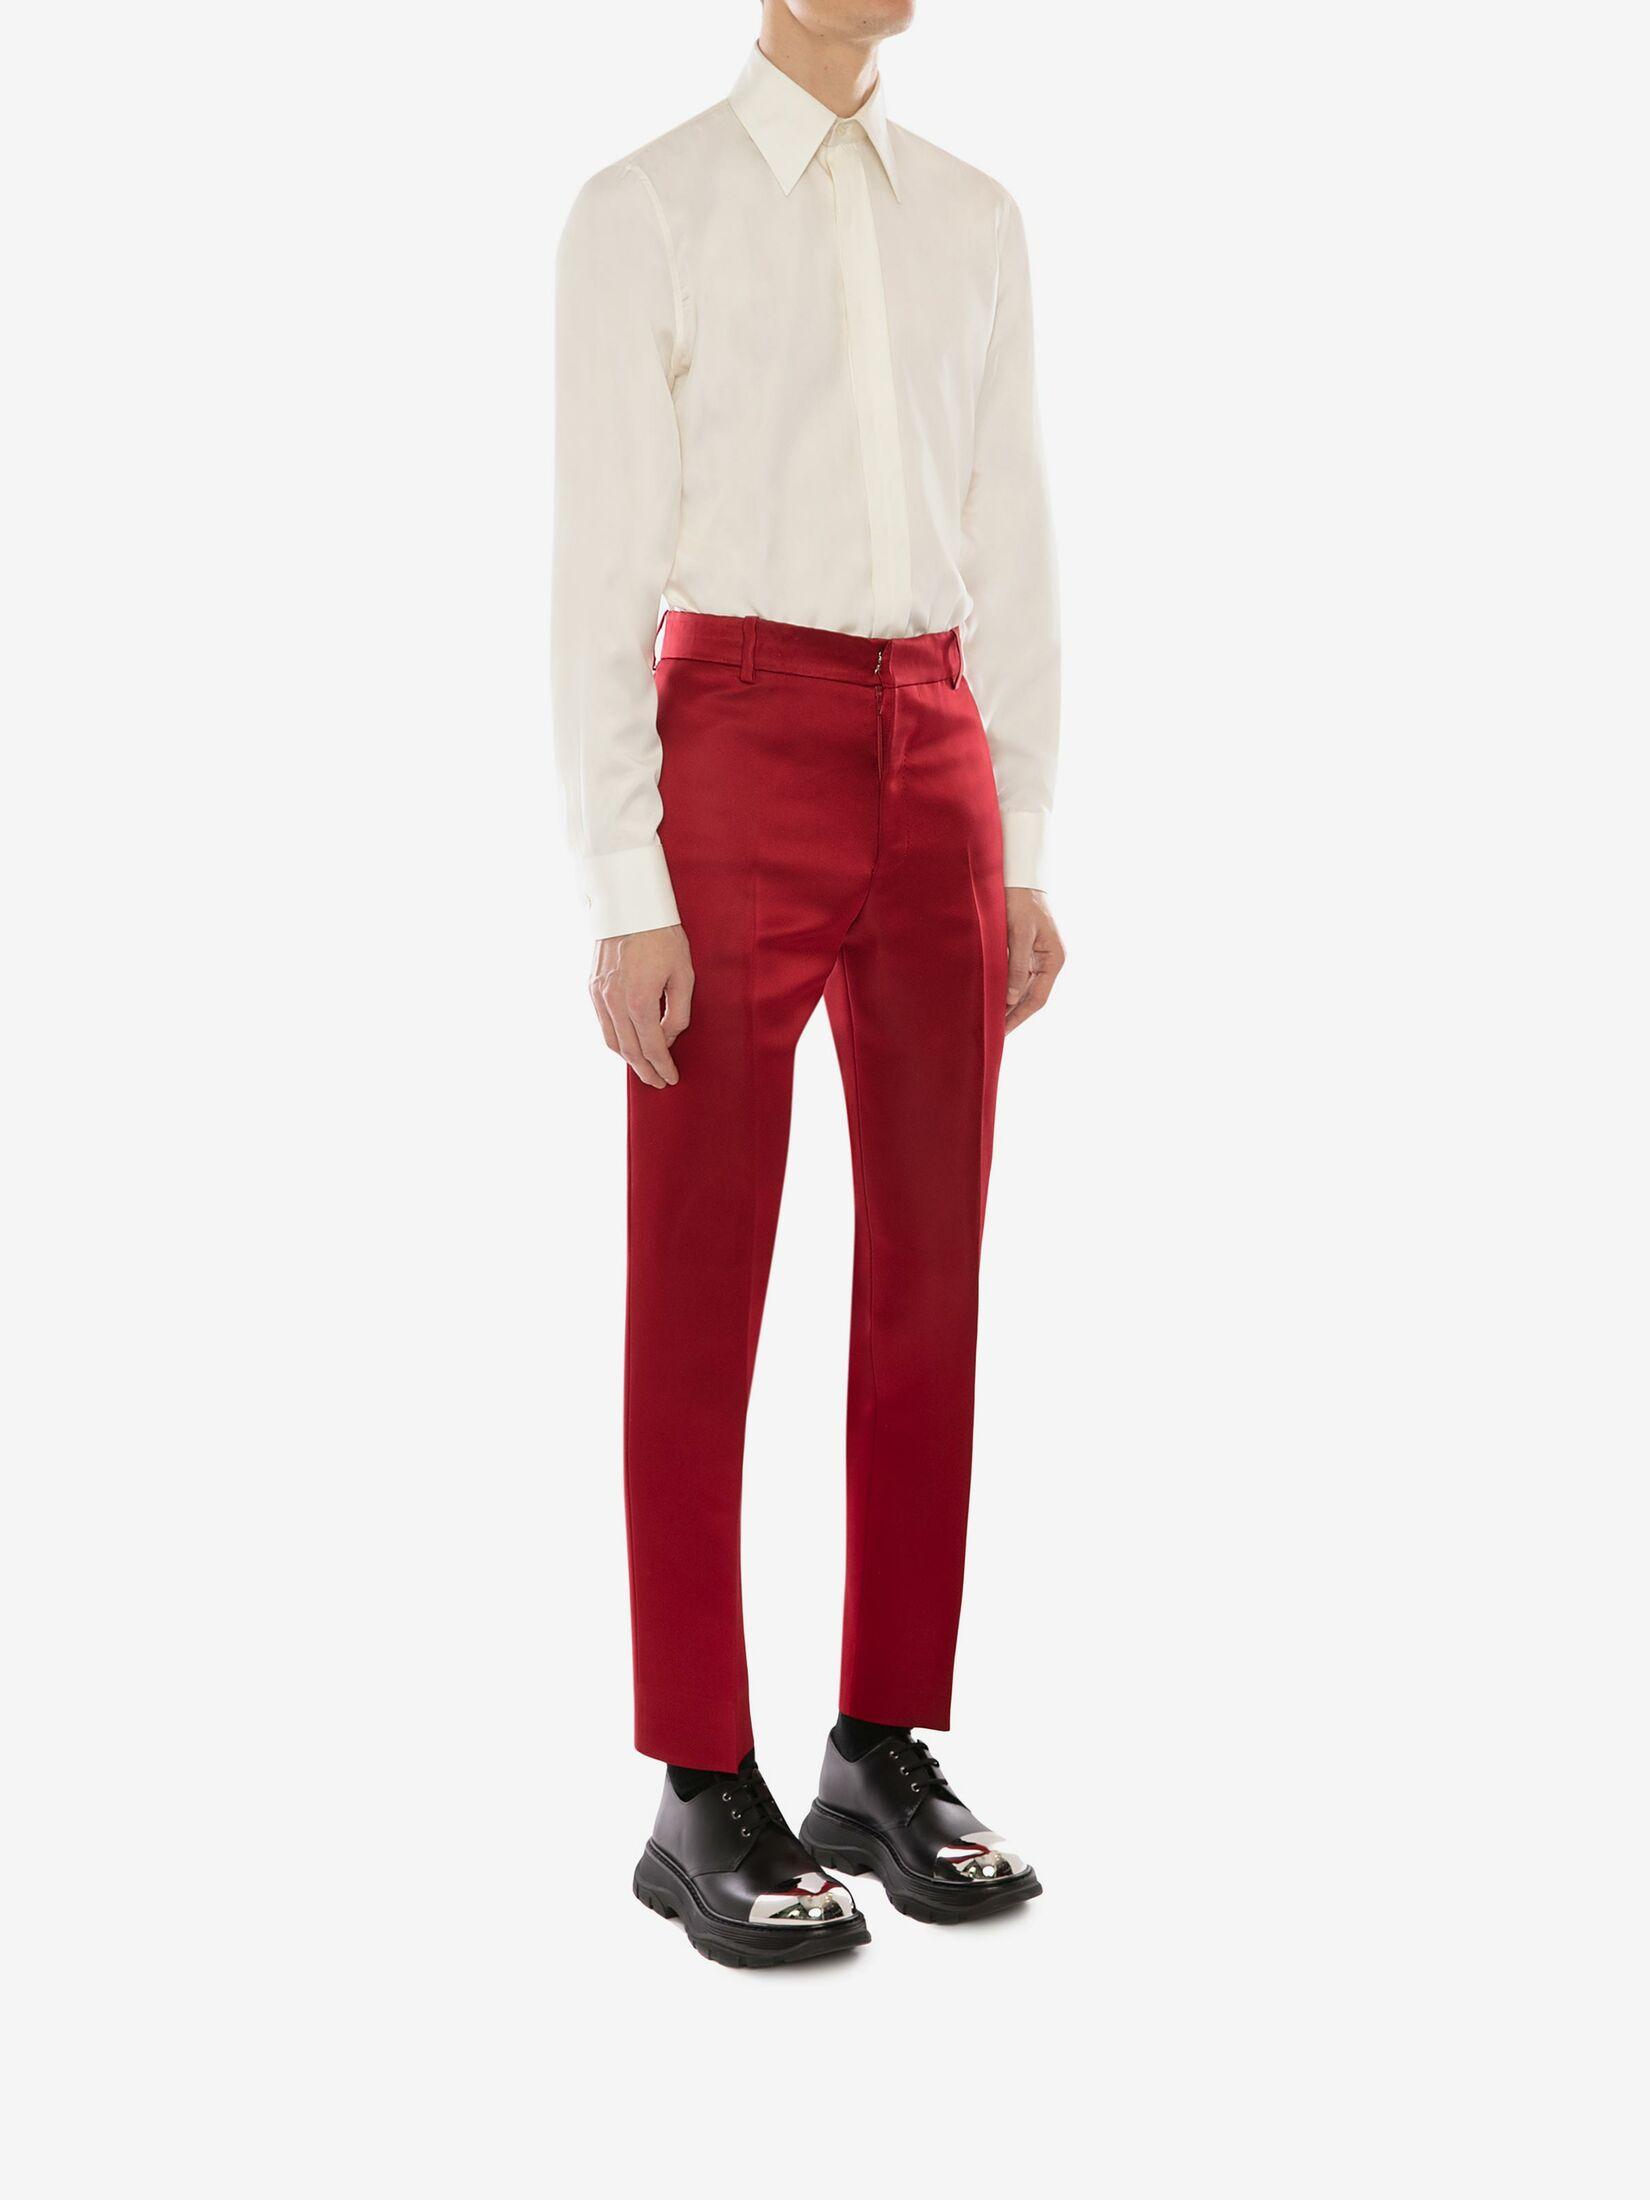 Alexander McQueen Red Satin Duchesse Cigarette Trousers for Men